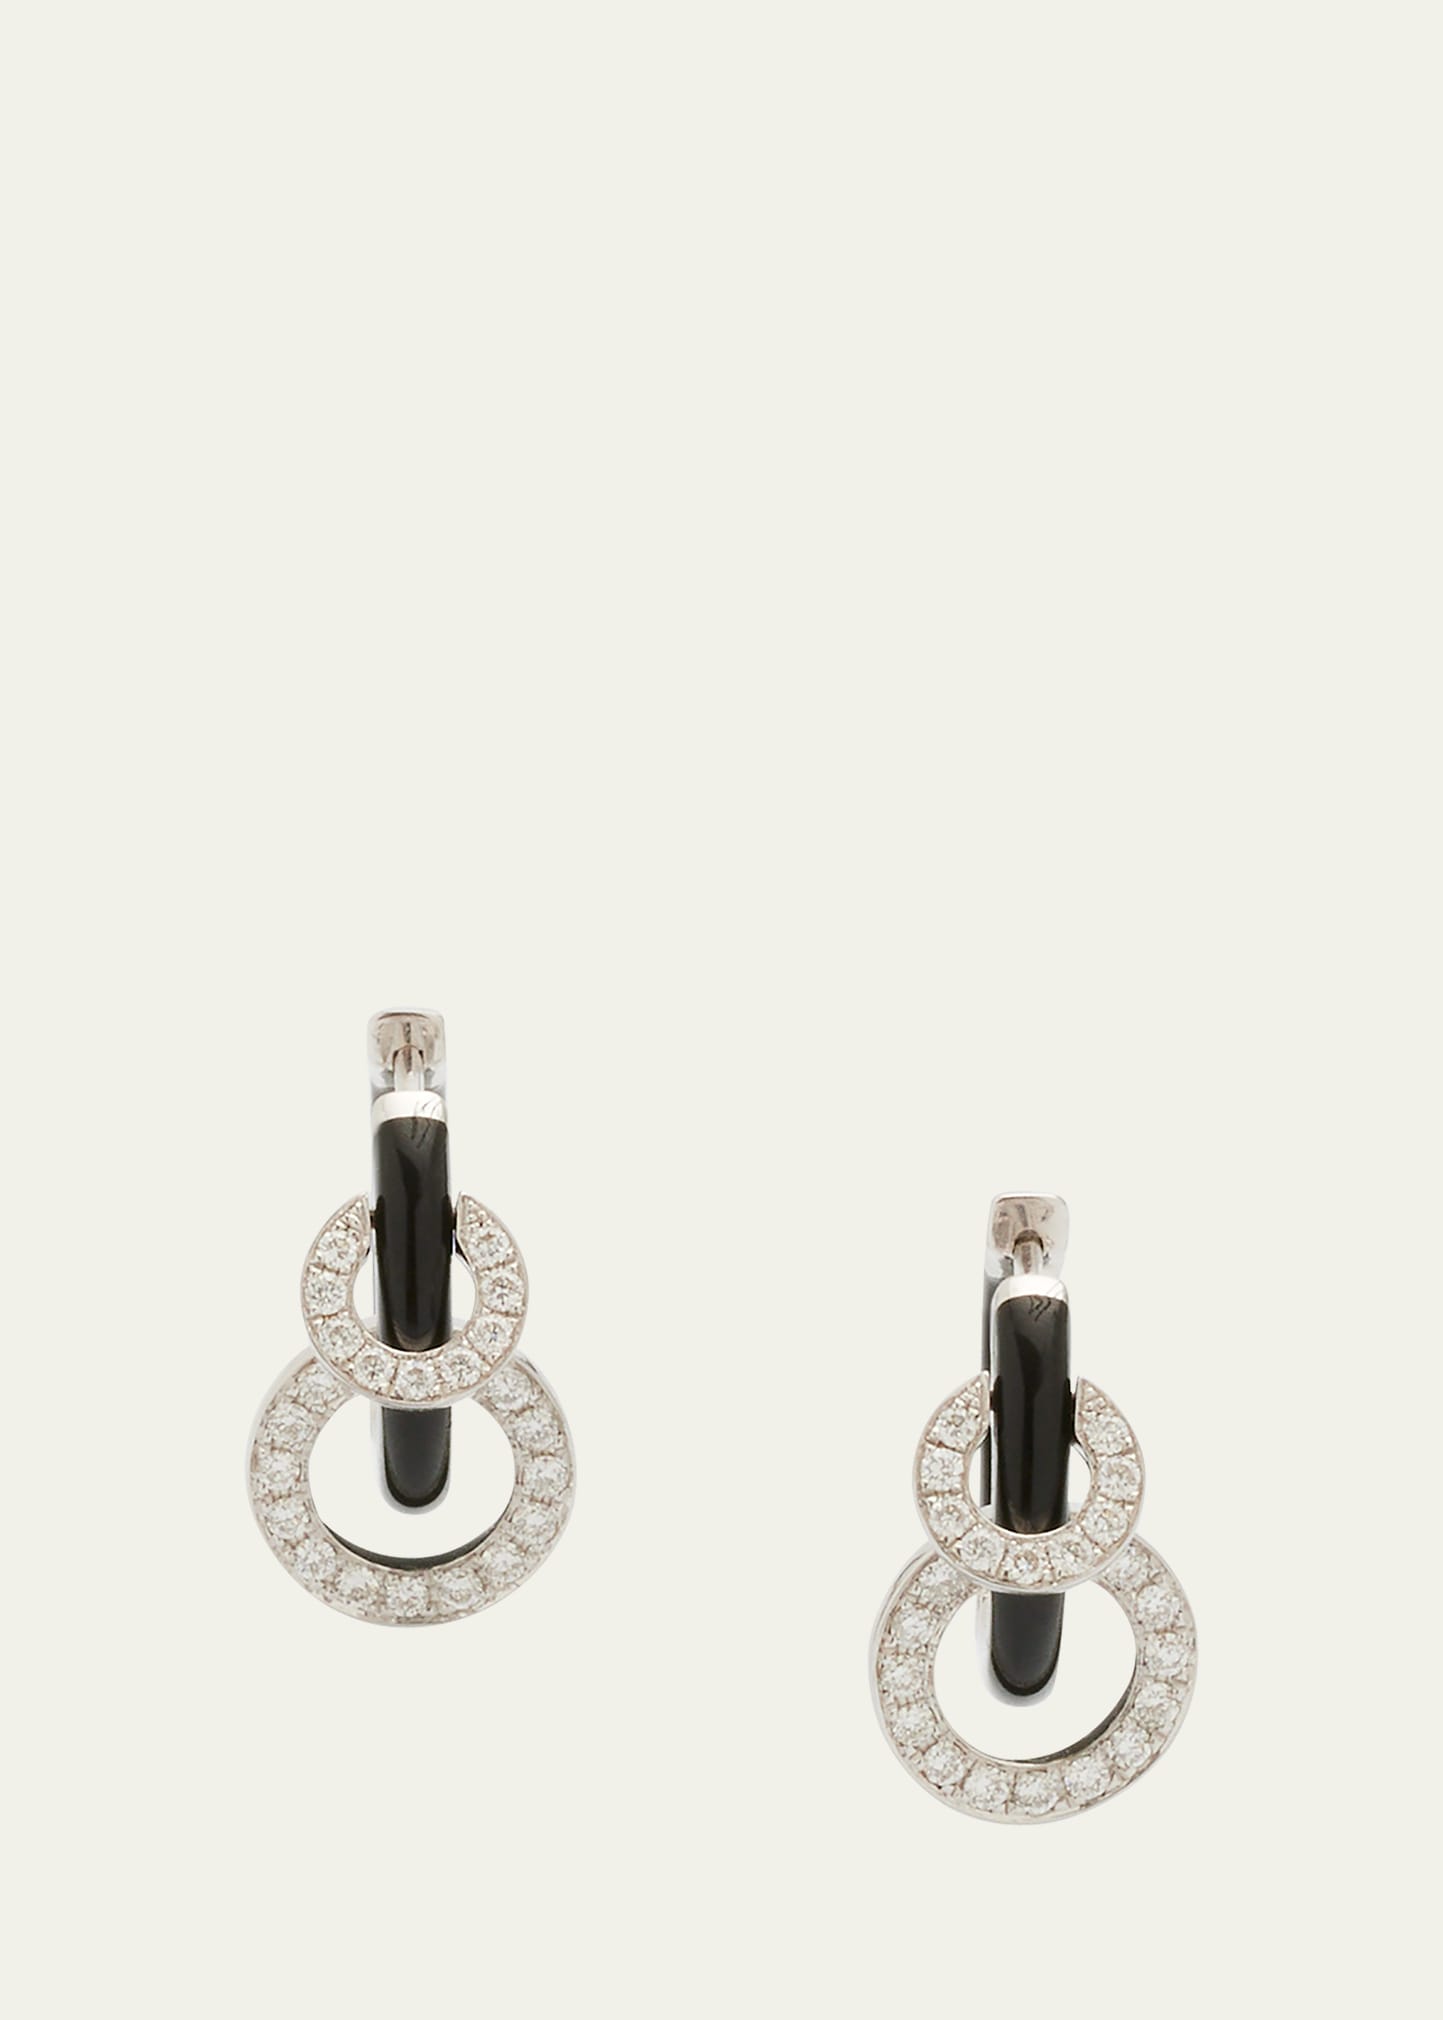 Oui Earrings with Black Enamel and White Diamonds in 18K White Gold